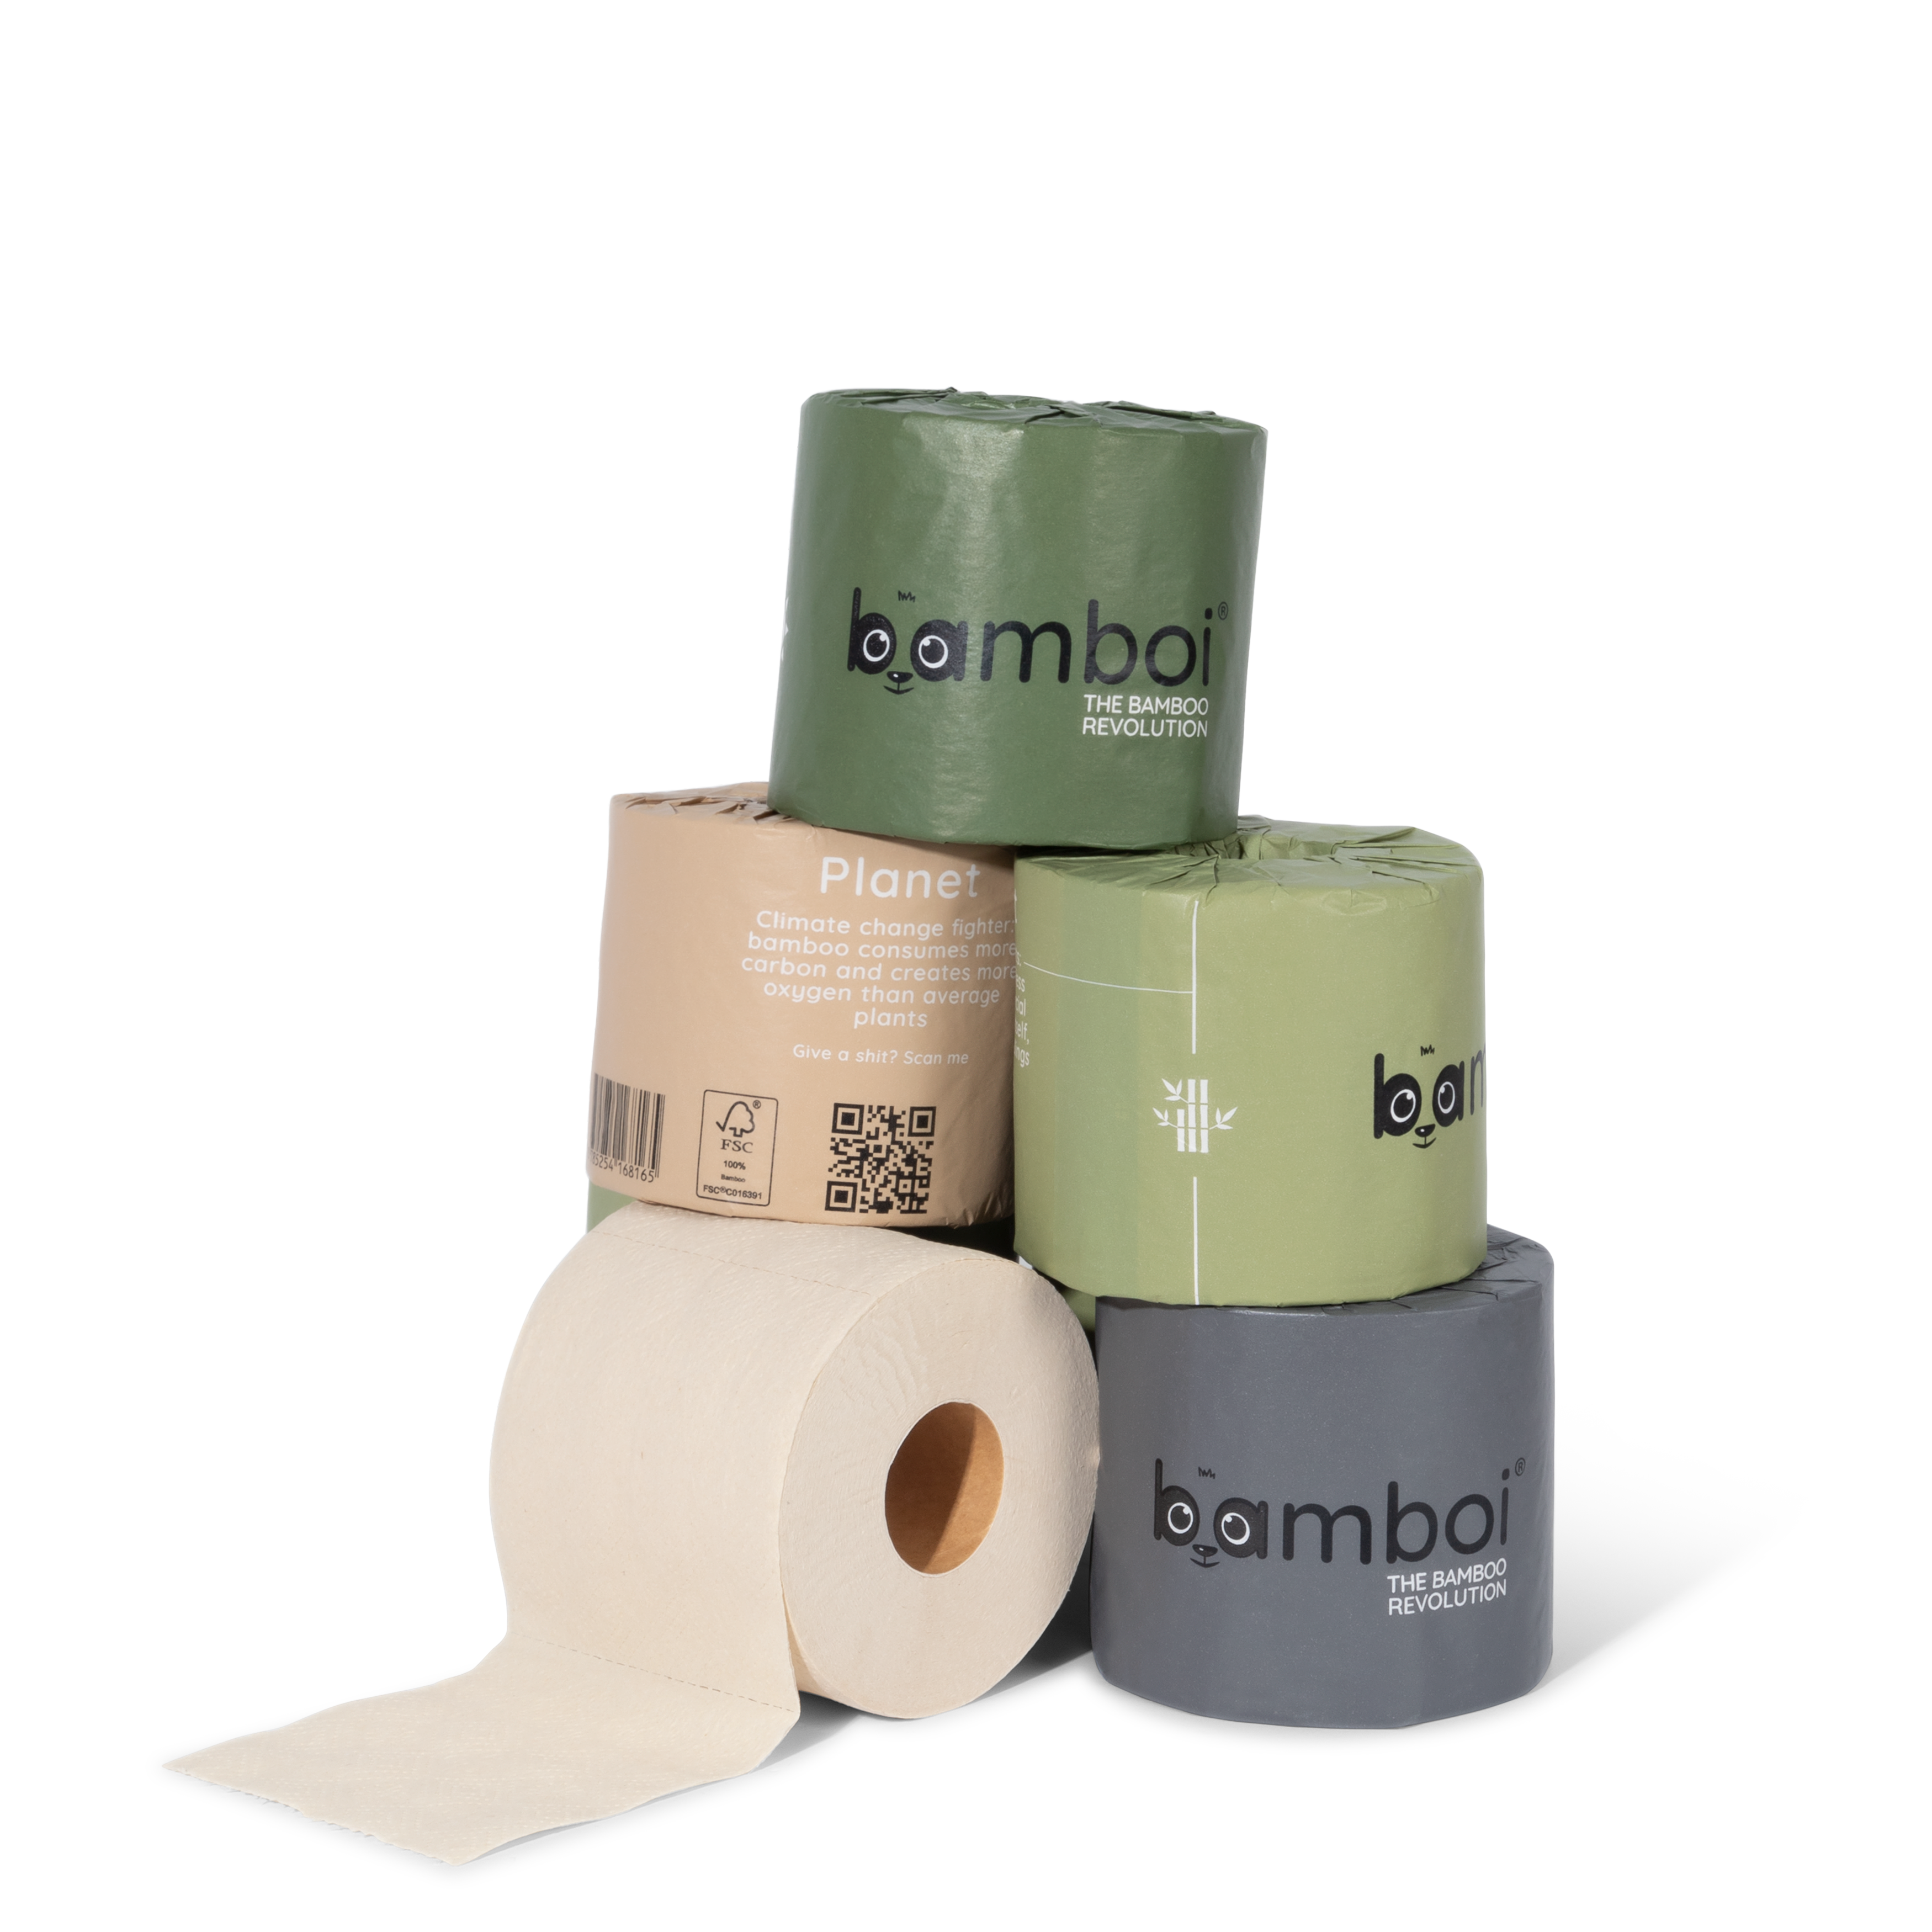 Inhalen Koningin forum 100% Bamboe Toiletpapier | Bamboi®